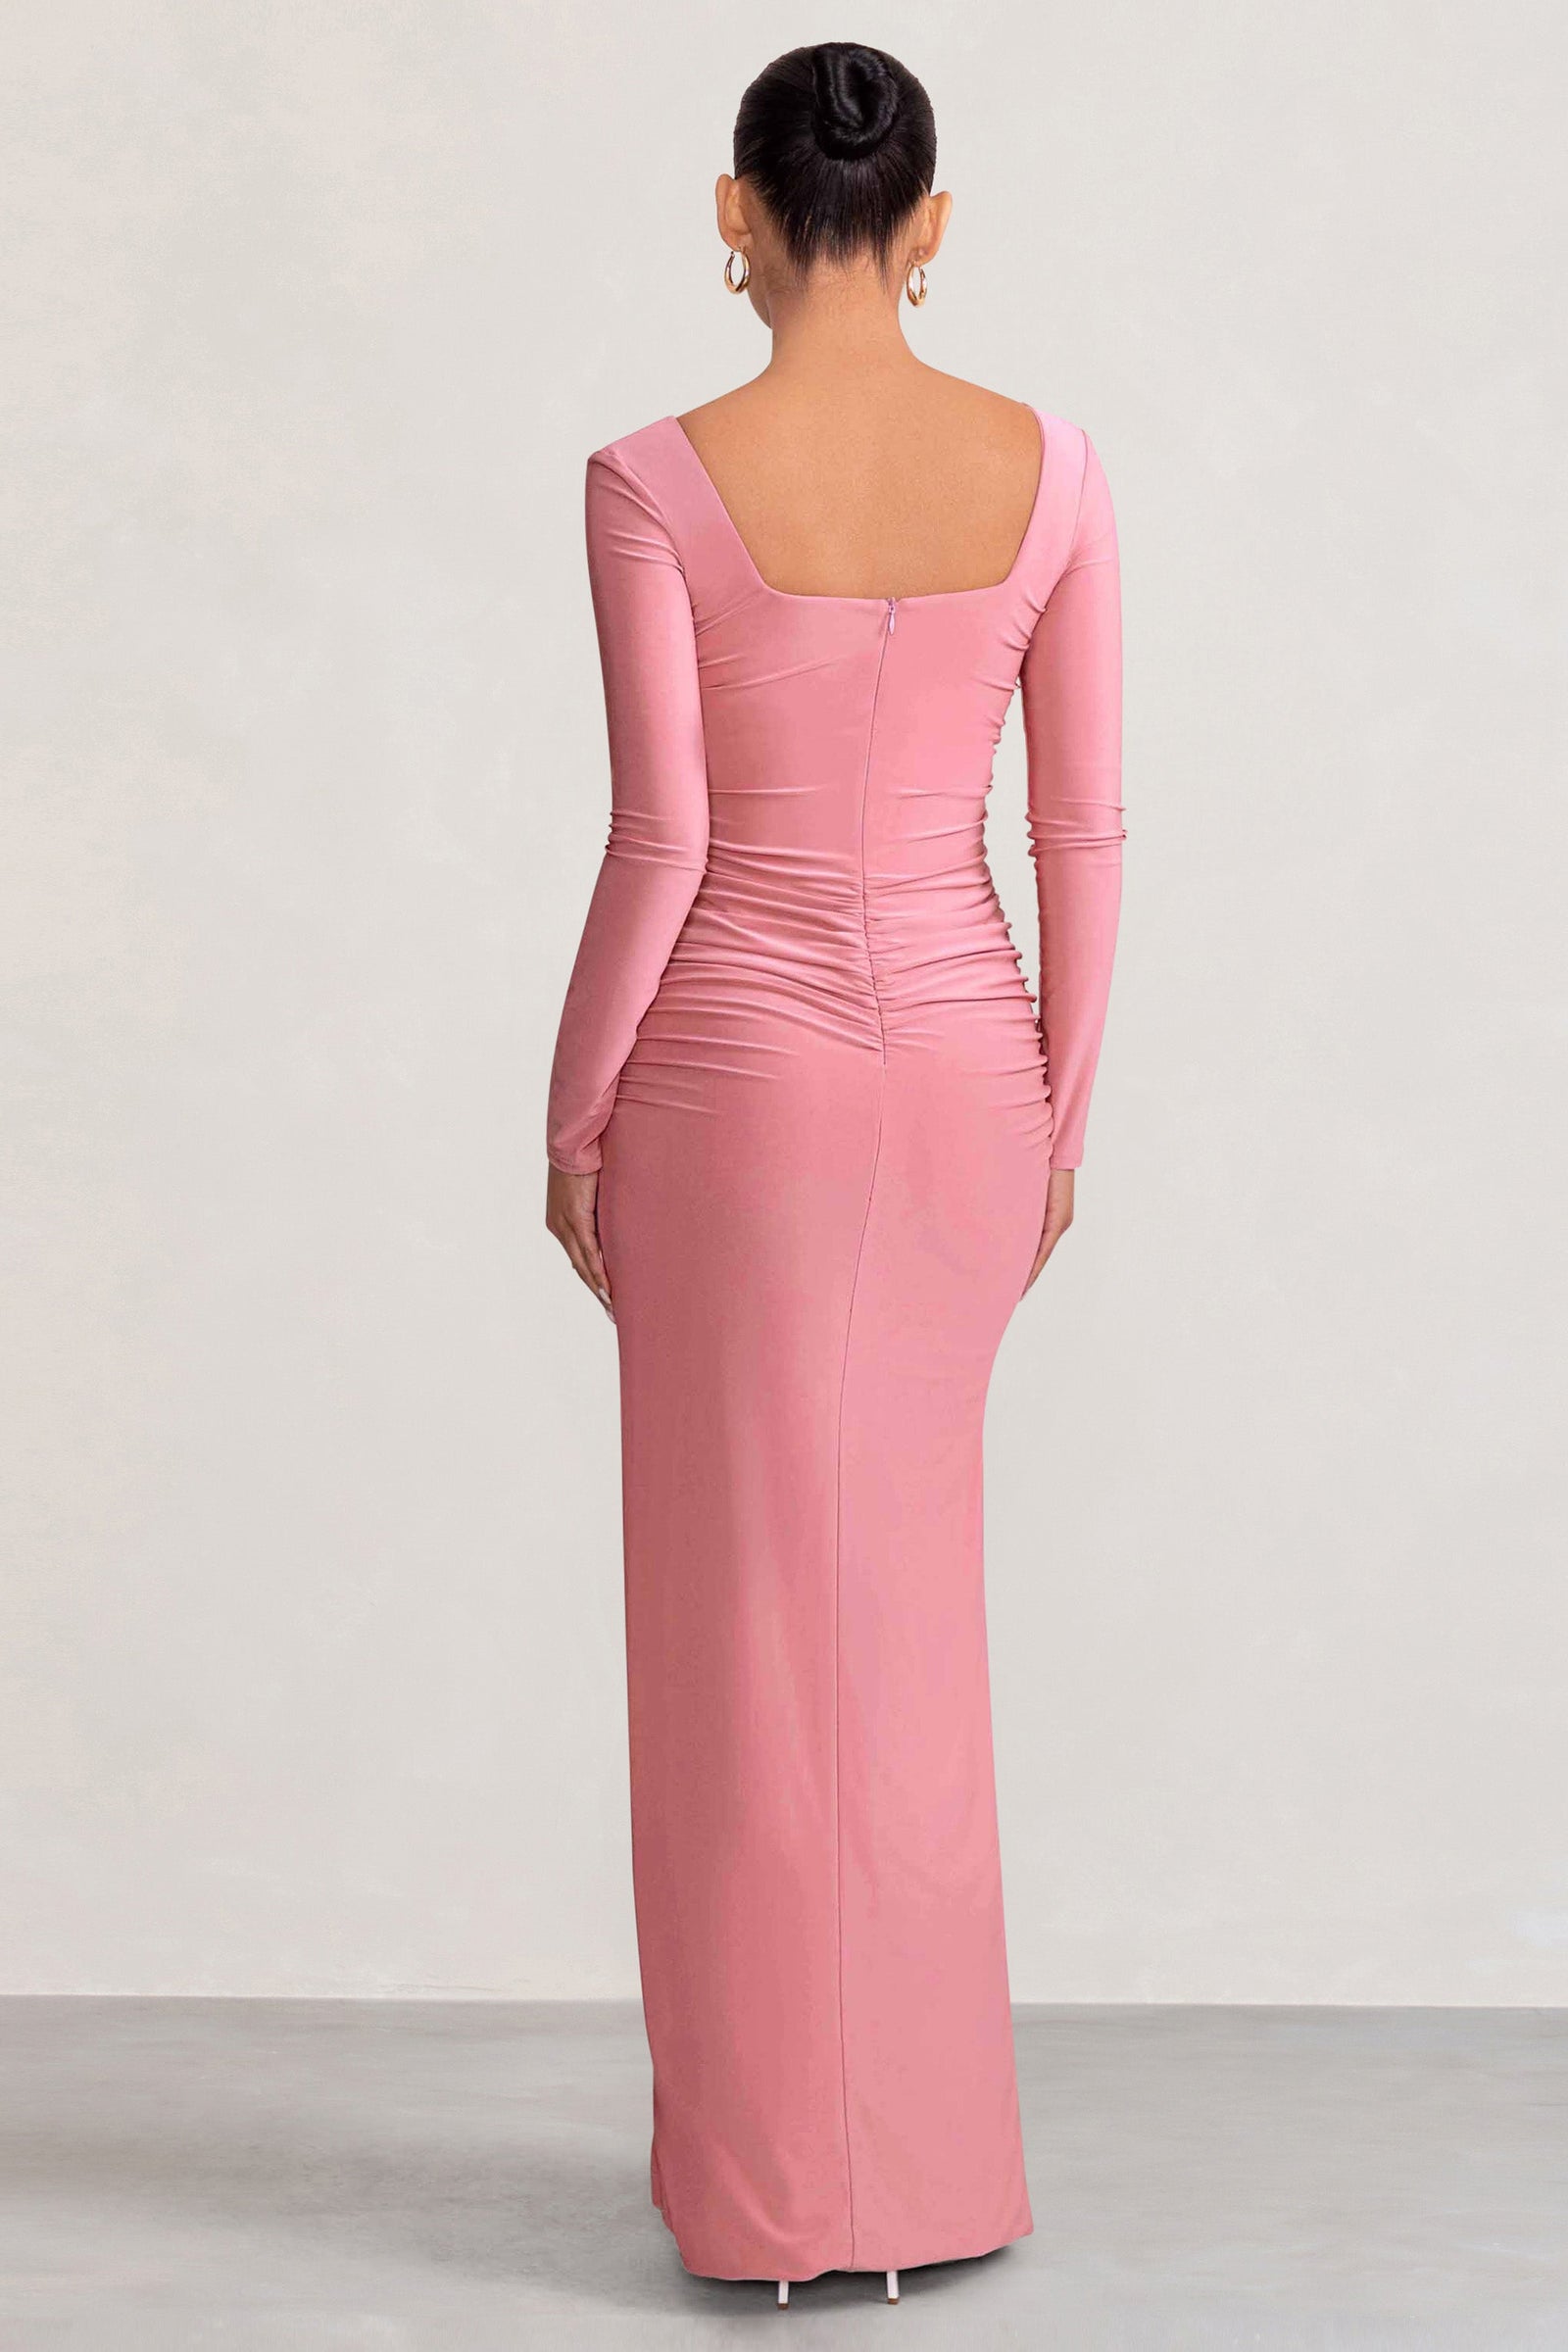 Serenity Maternity Maxi Dress Bellini Pink